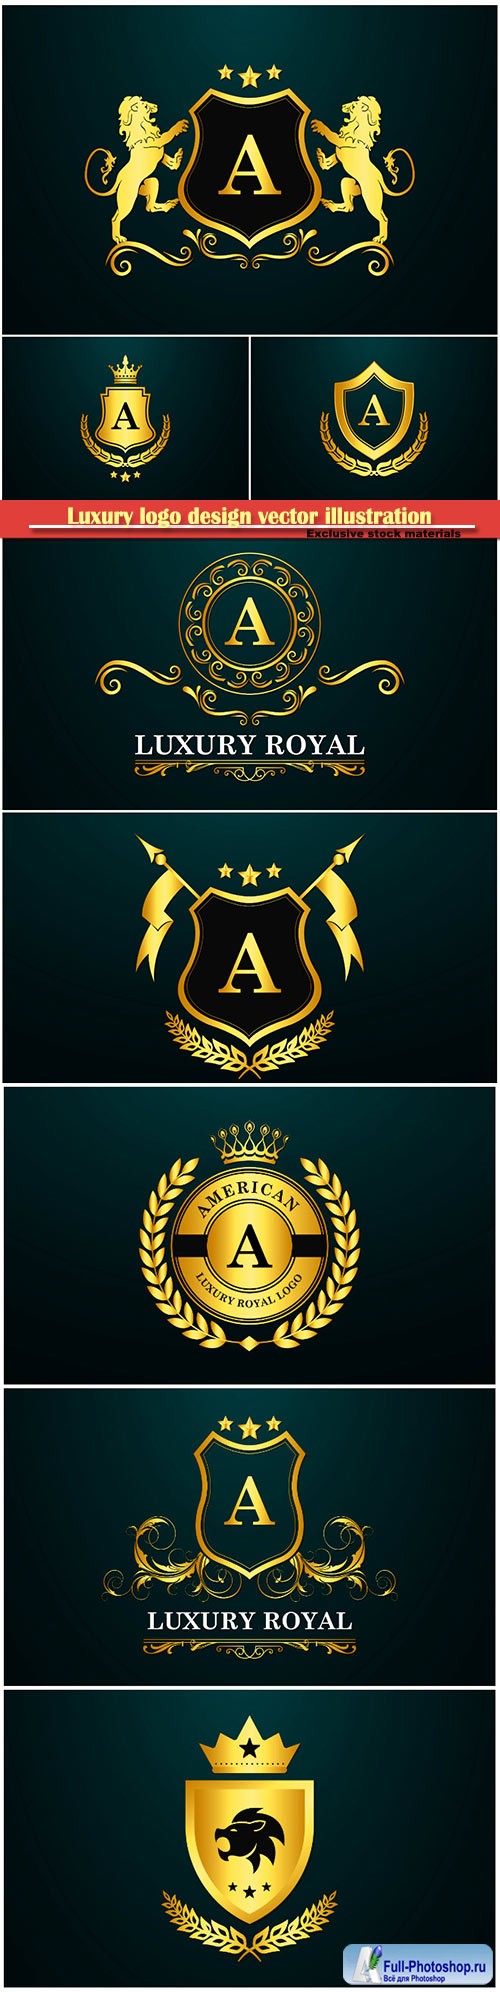 Luxury logo design vector illustration template